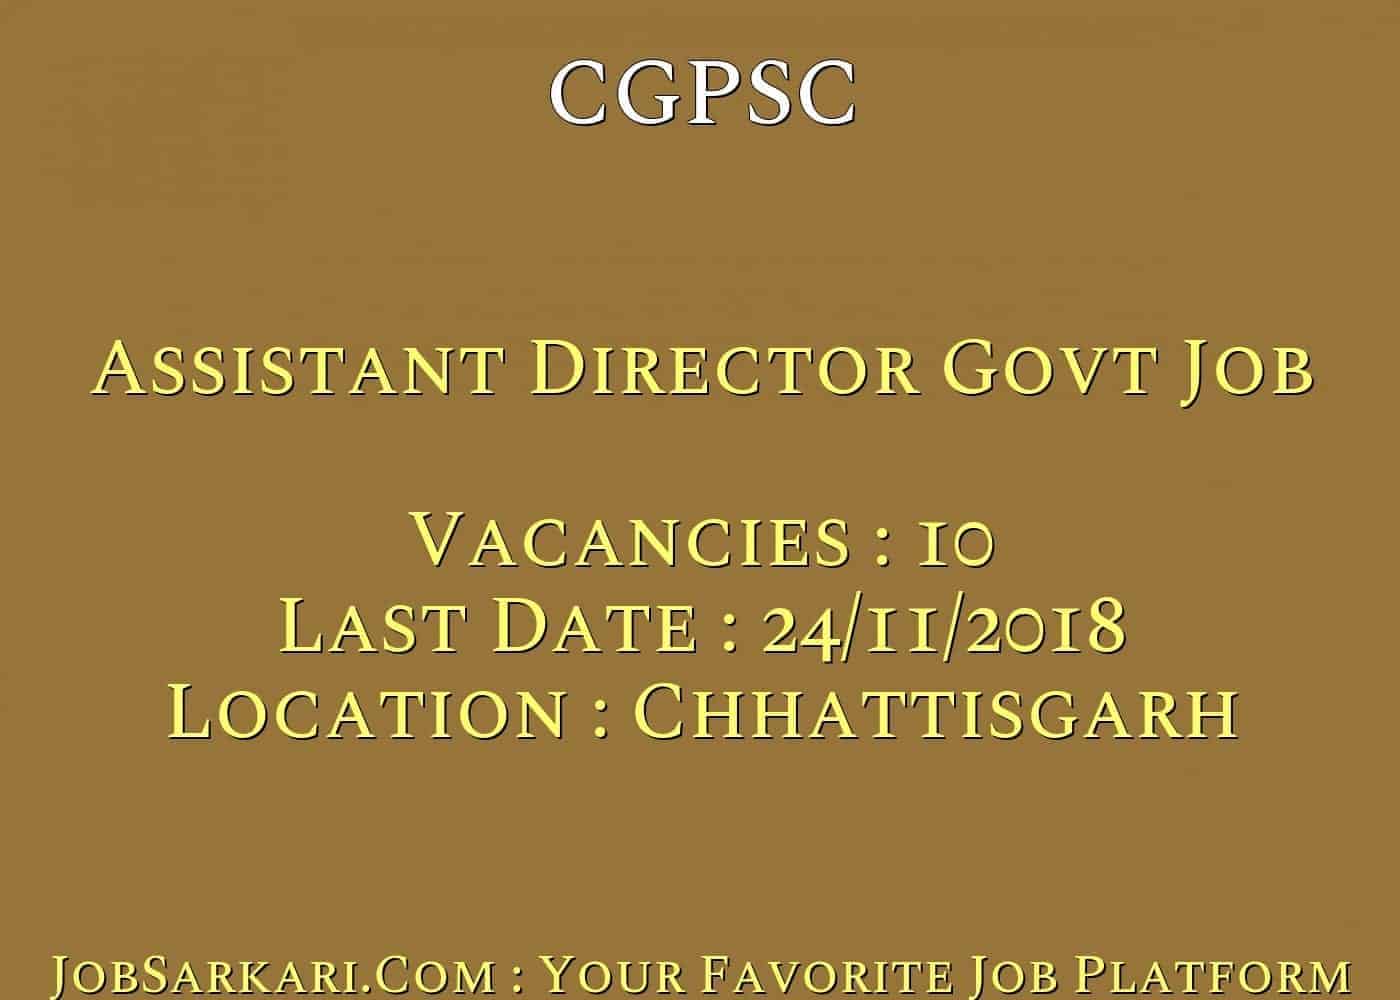 CGPSC Recruitment 2018 for Assistant Director Govt Job